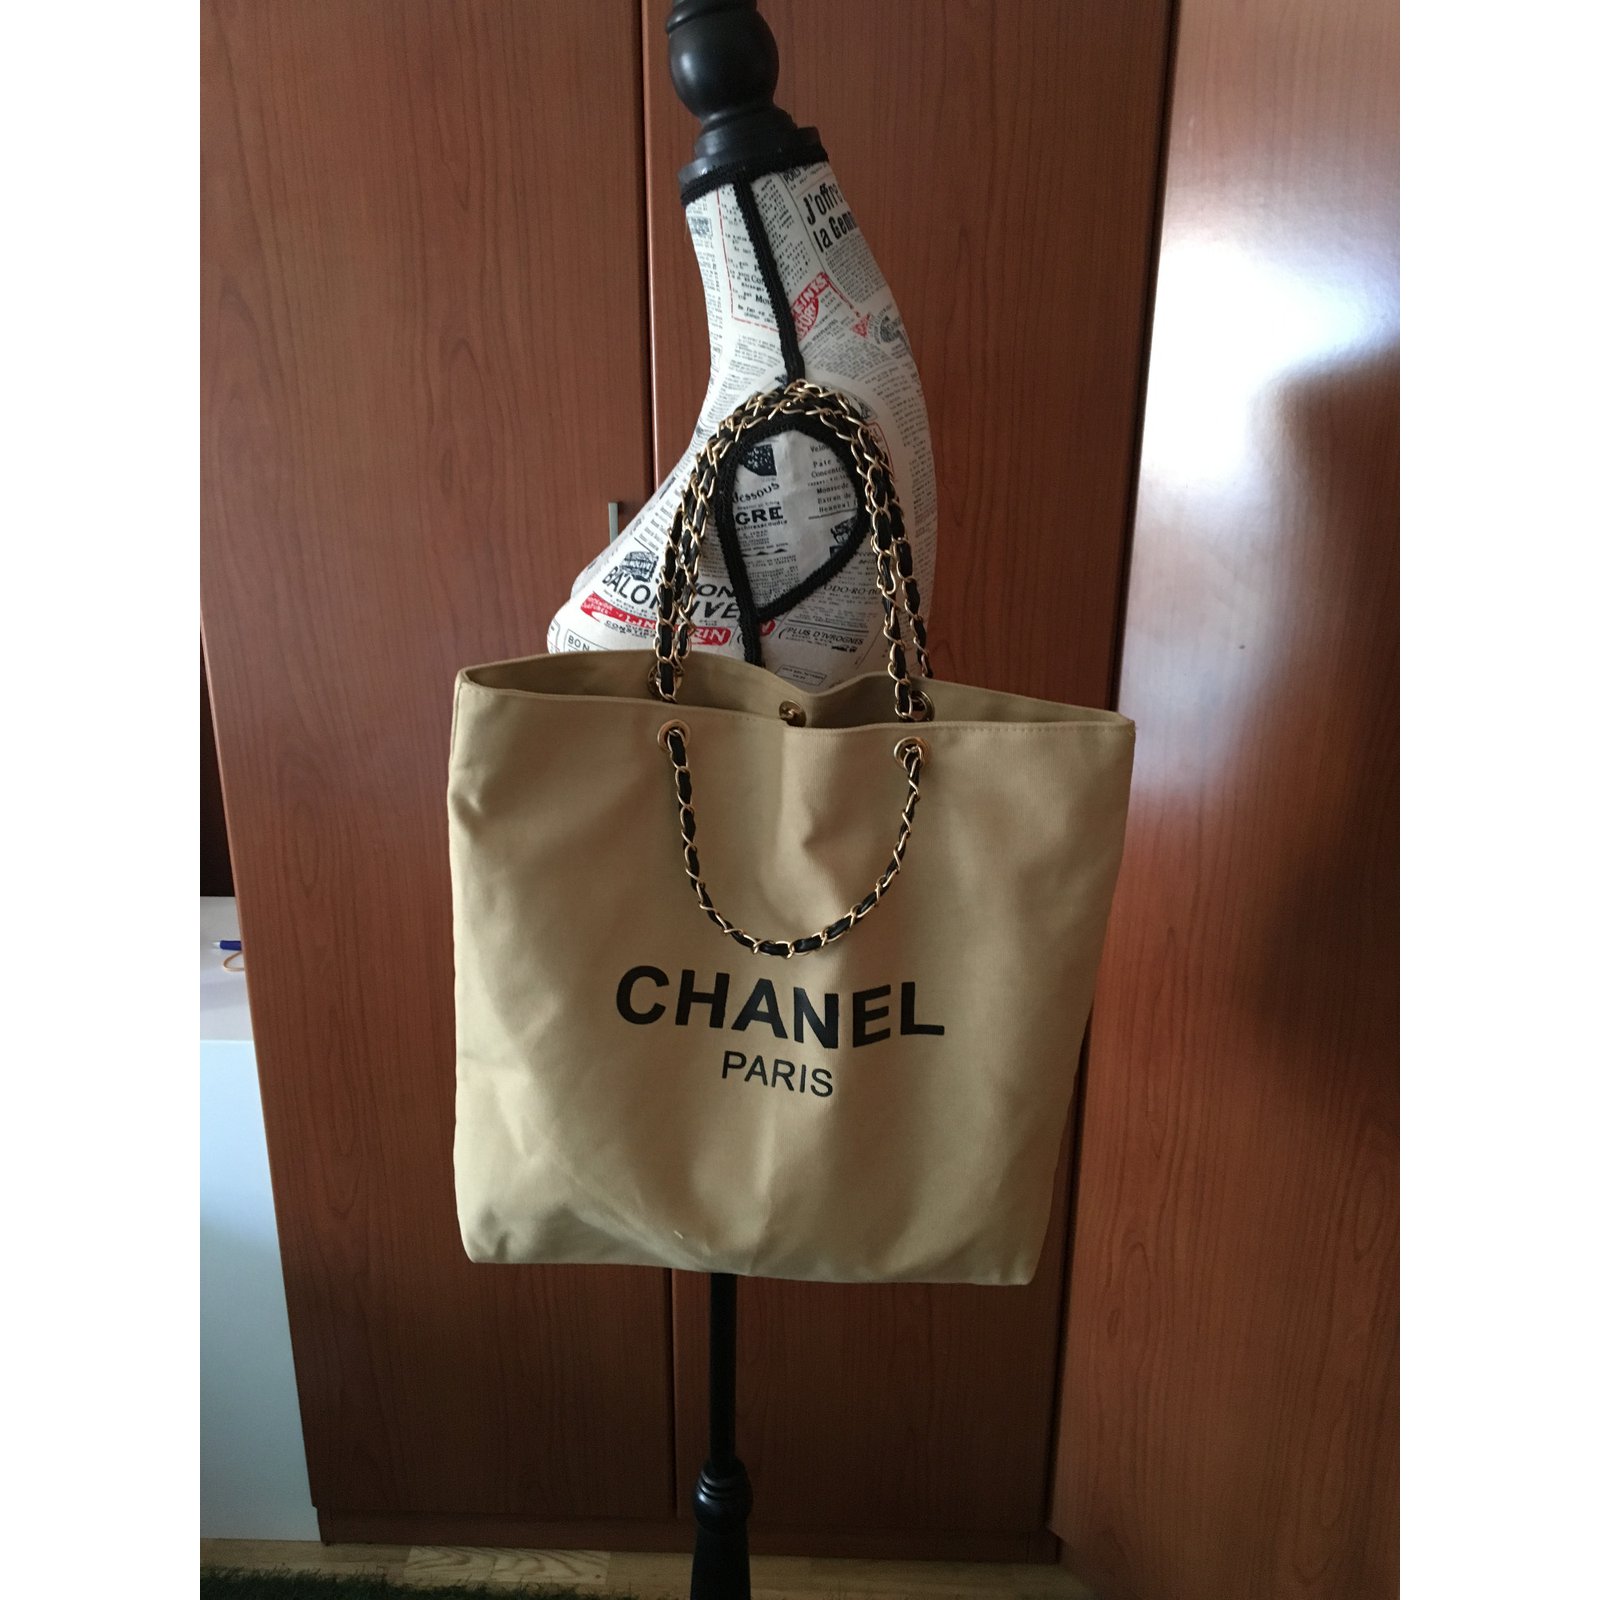 Chanel bag #shorts #shorts #bougieonabudget #dhgatefinds